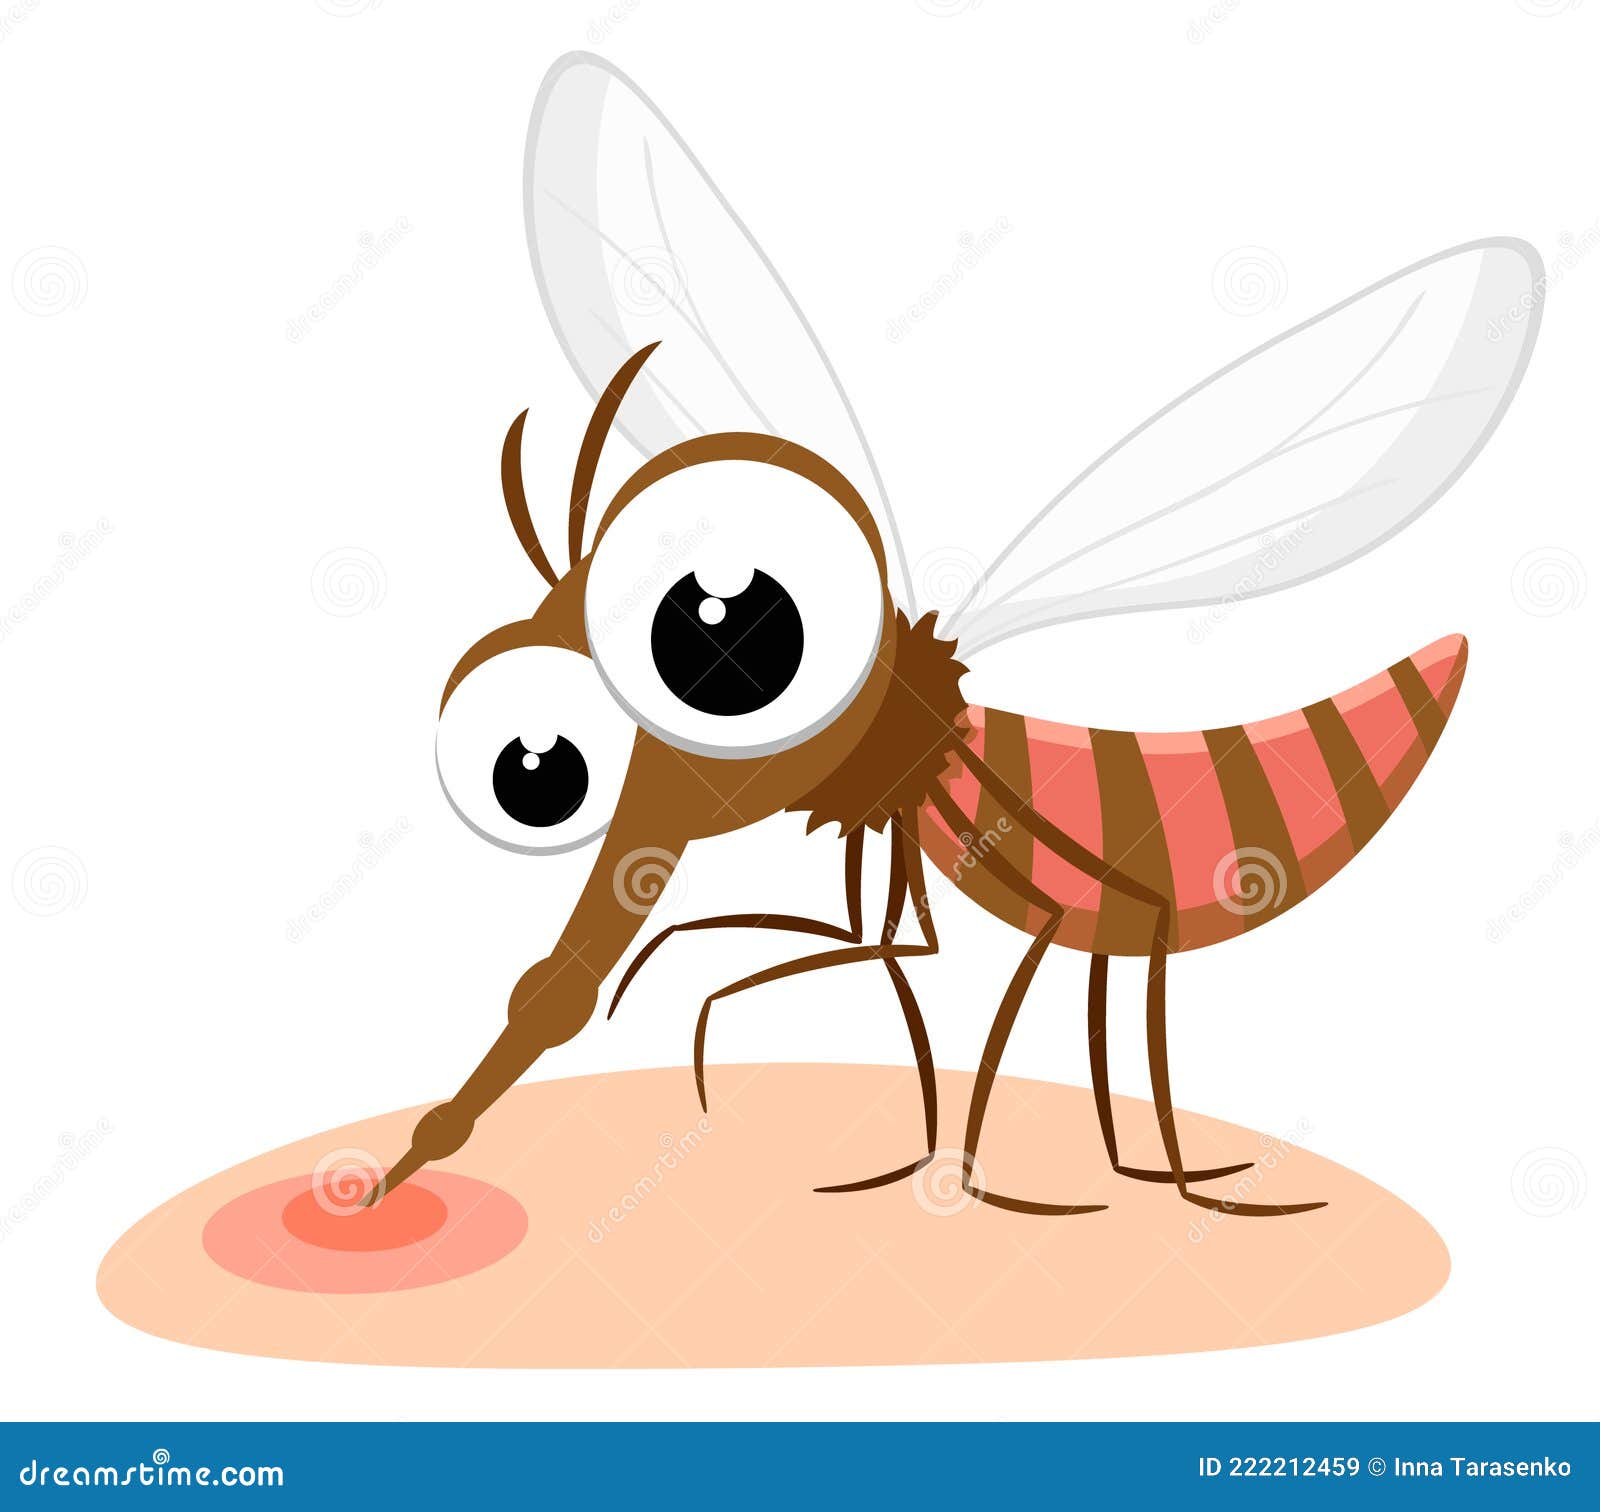 Top 129 + Dibujo de mosquito para niños - Ginformate.mx